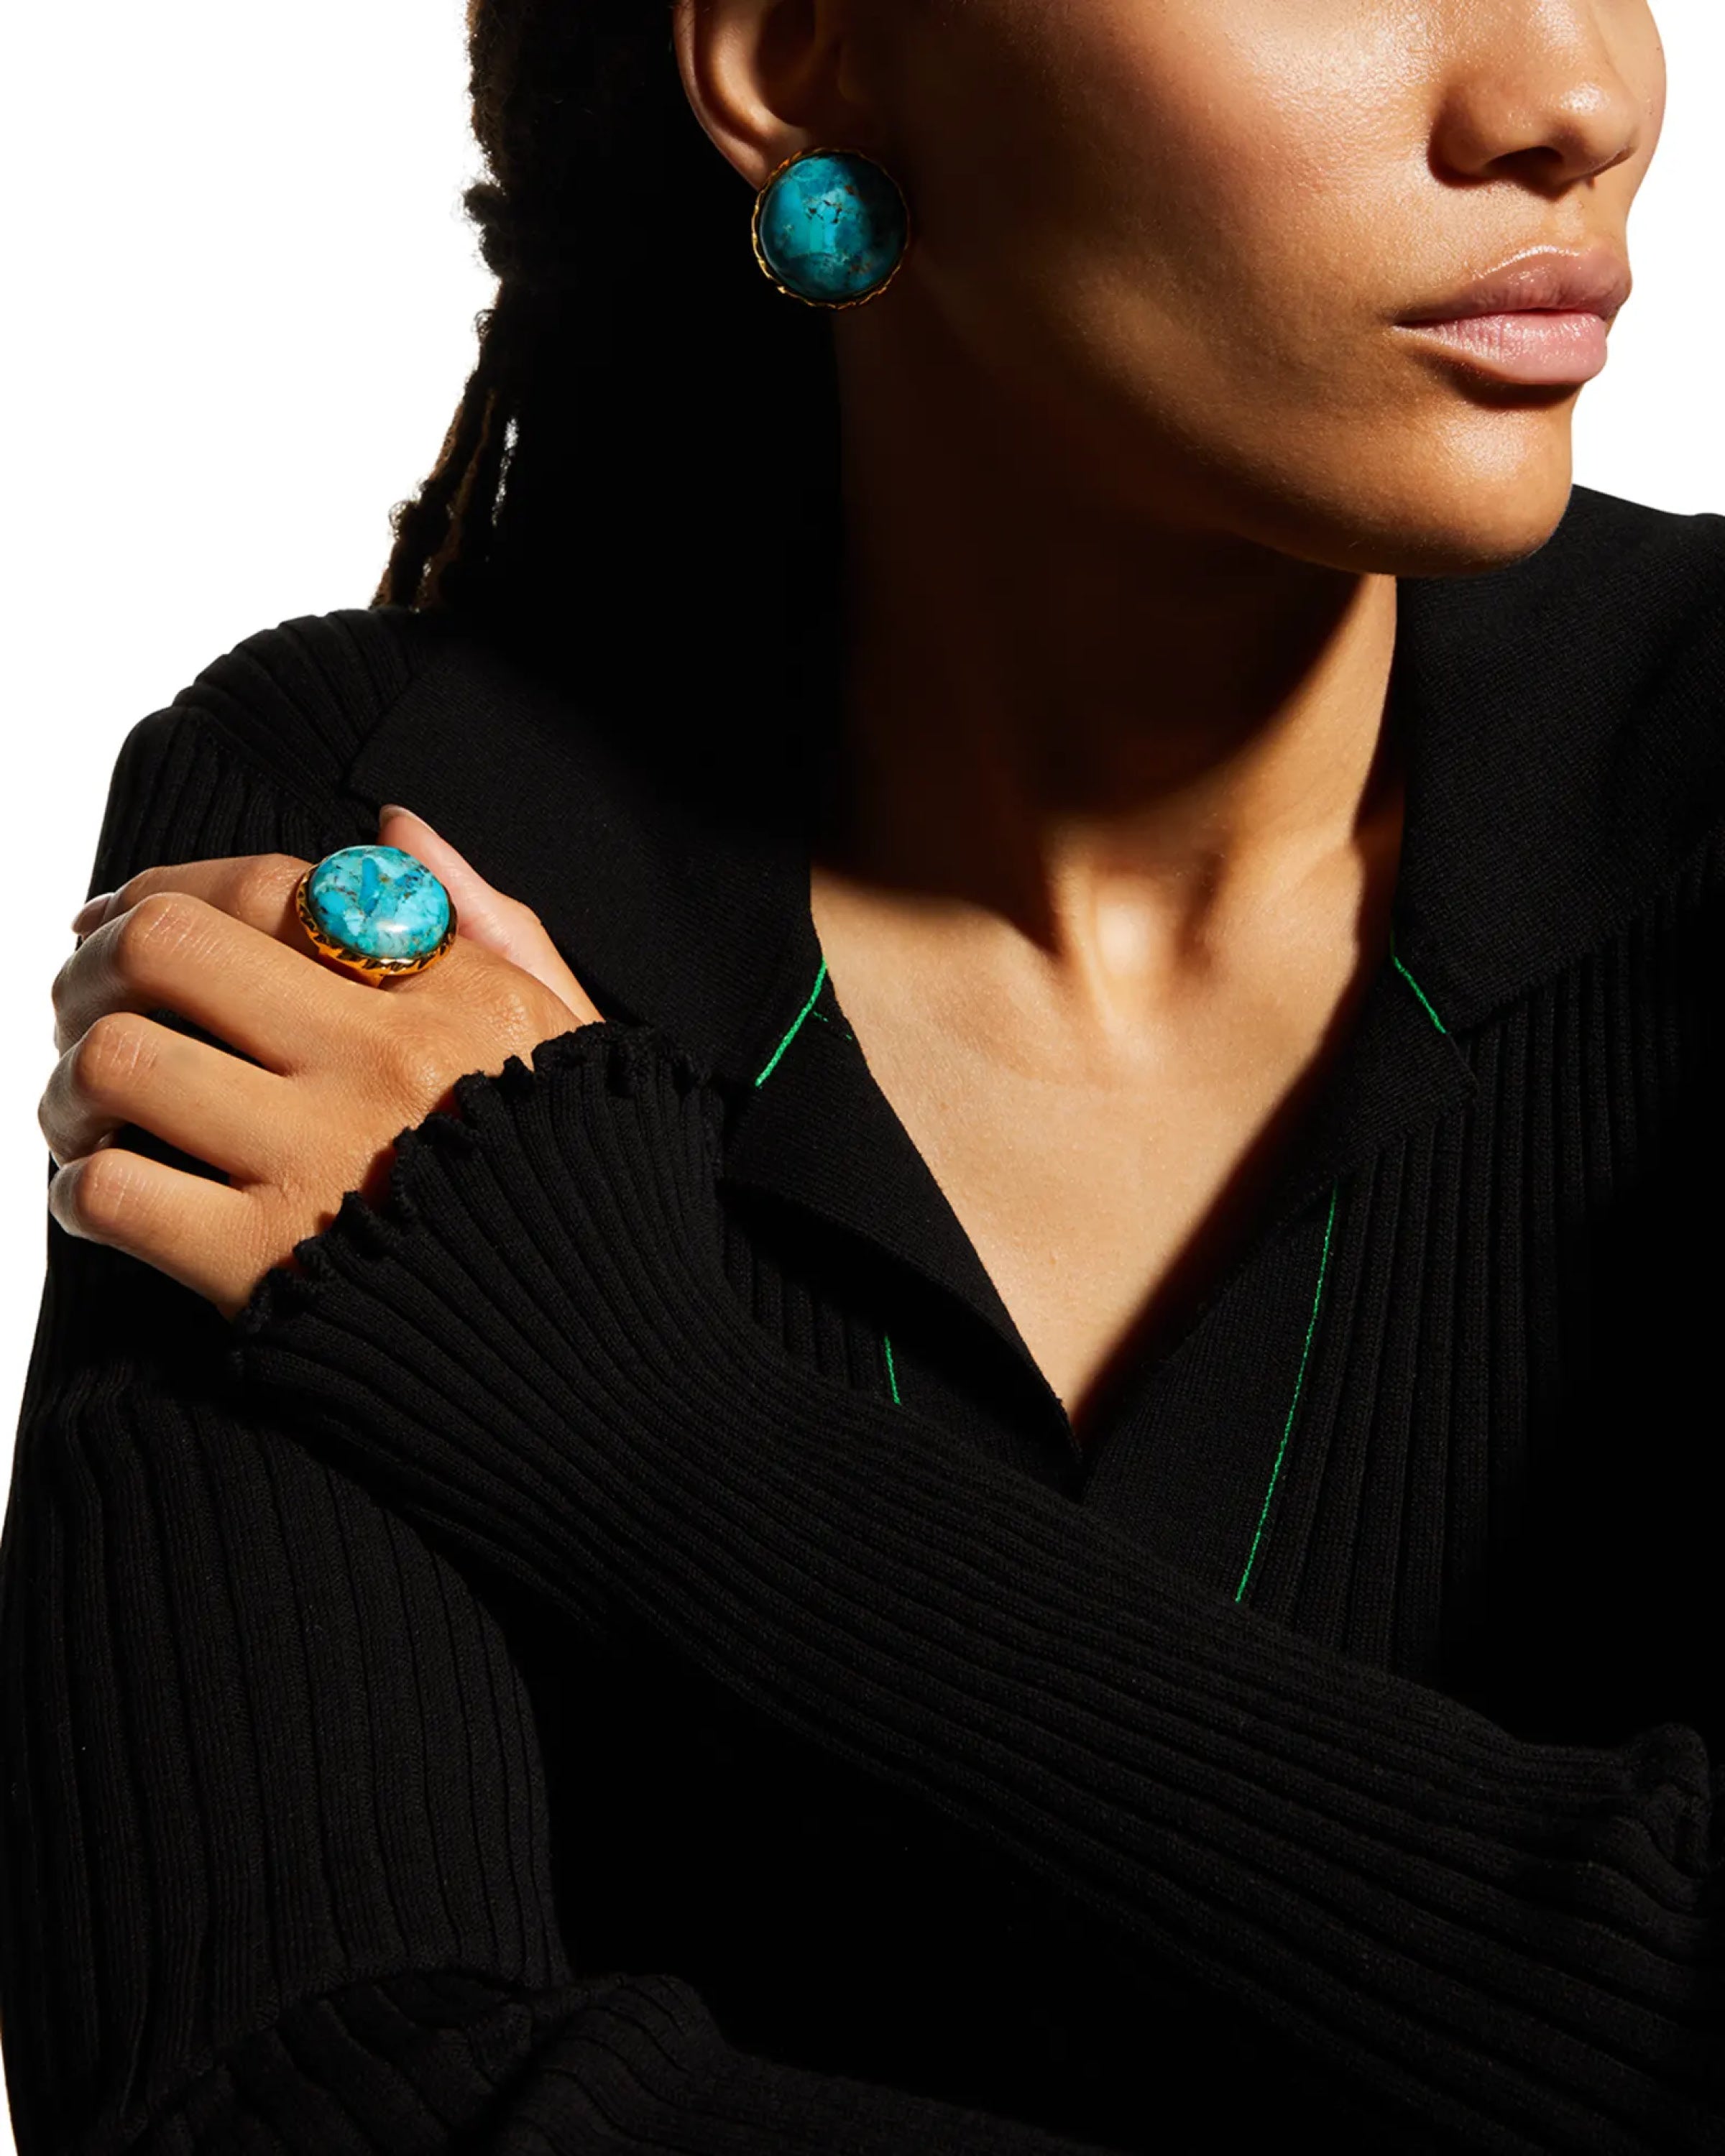 Turquoise Bezel Clip Back Earrings